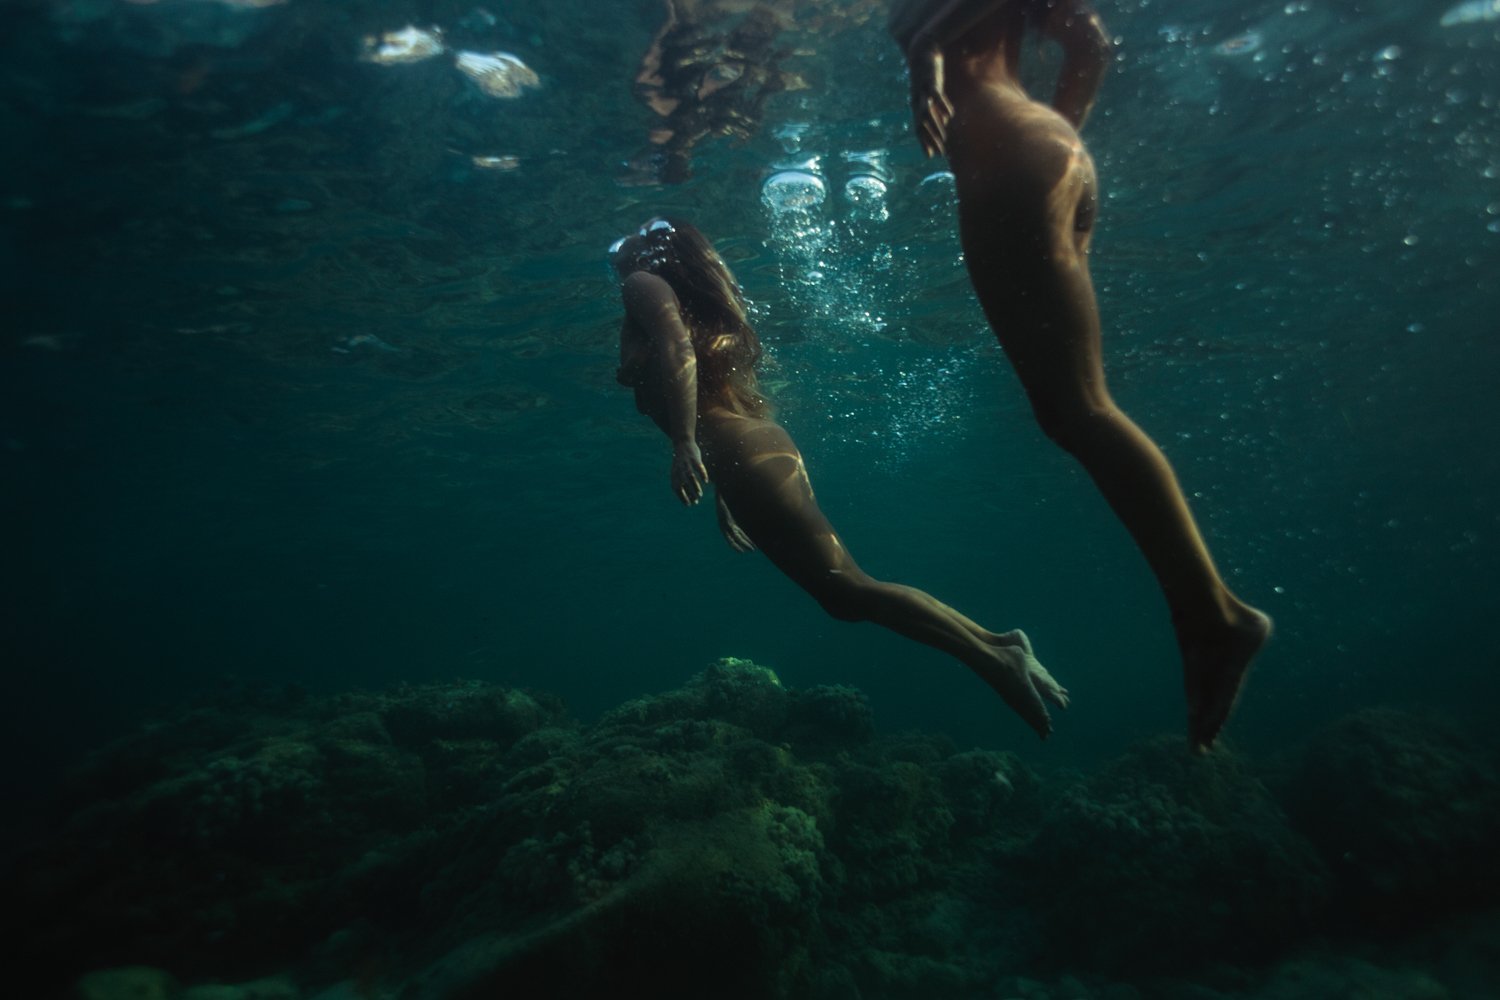 siren sirens corse corsica underwater photography photographe sous leau mermaid femme woman women nude nue fine art photography Krista Espino ajaccio sea Mediterranean france travel-16.jpg